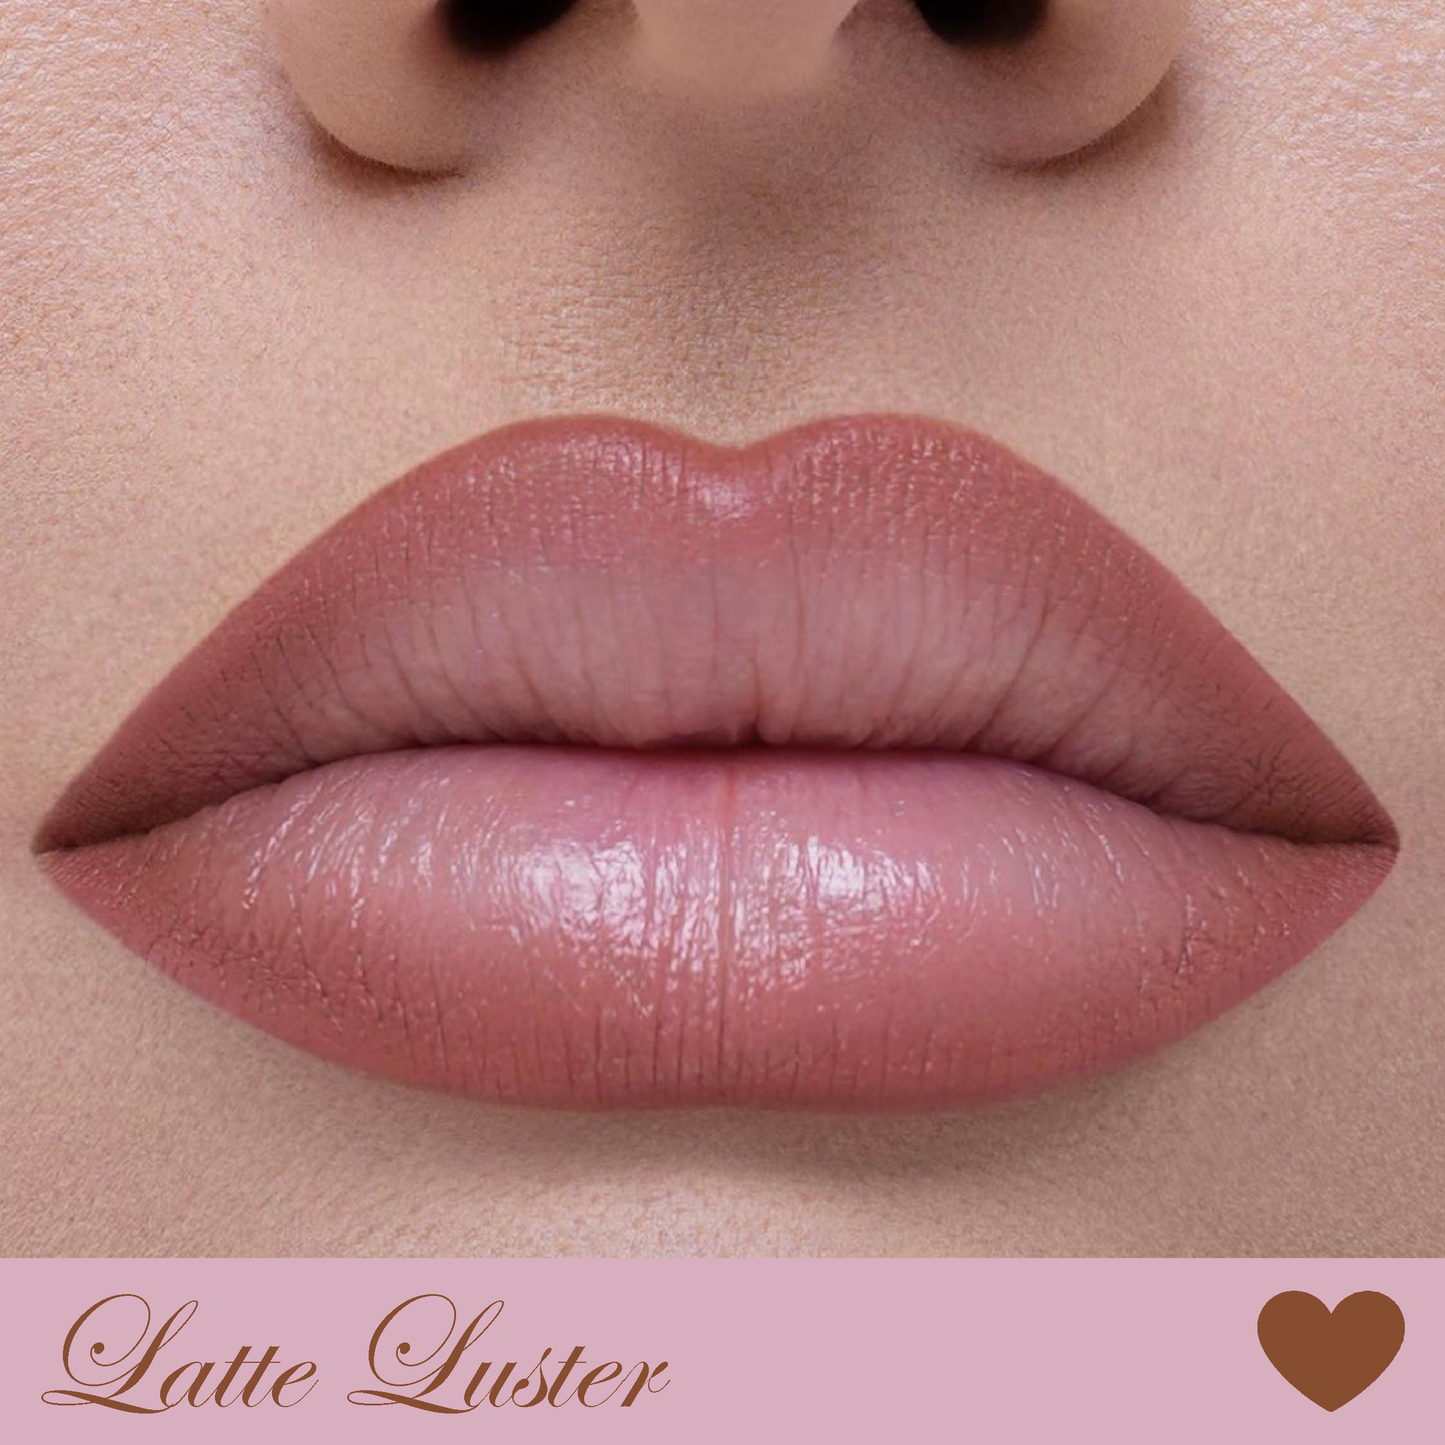 Lip Liners